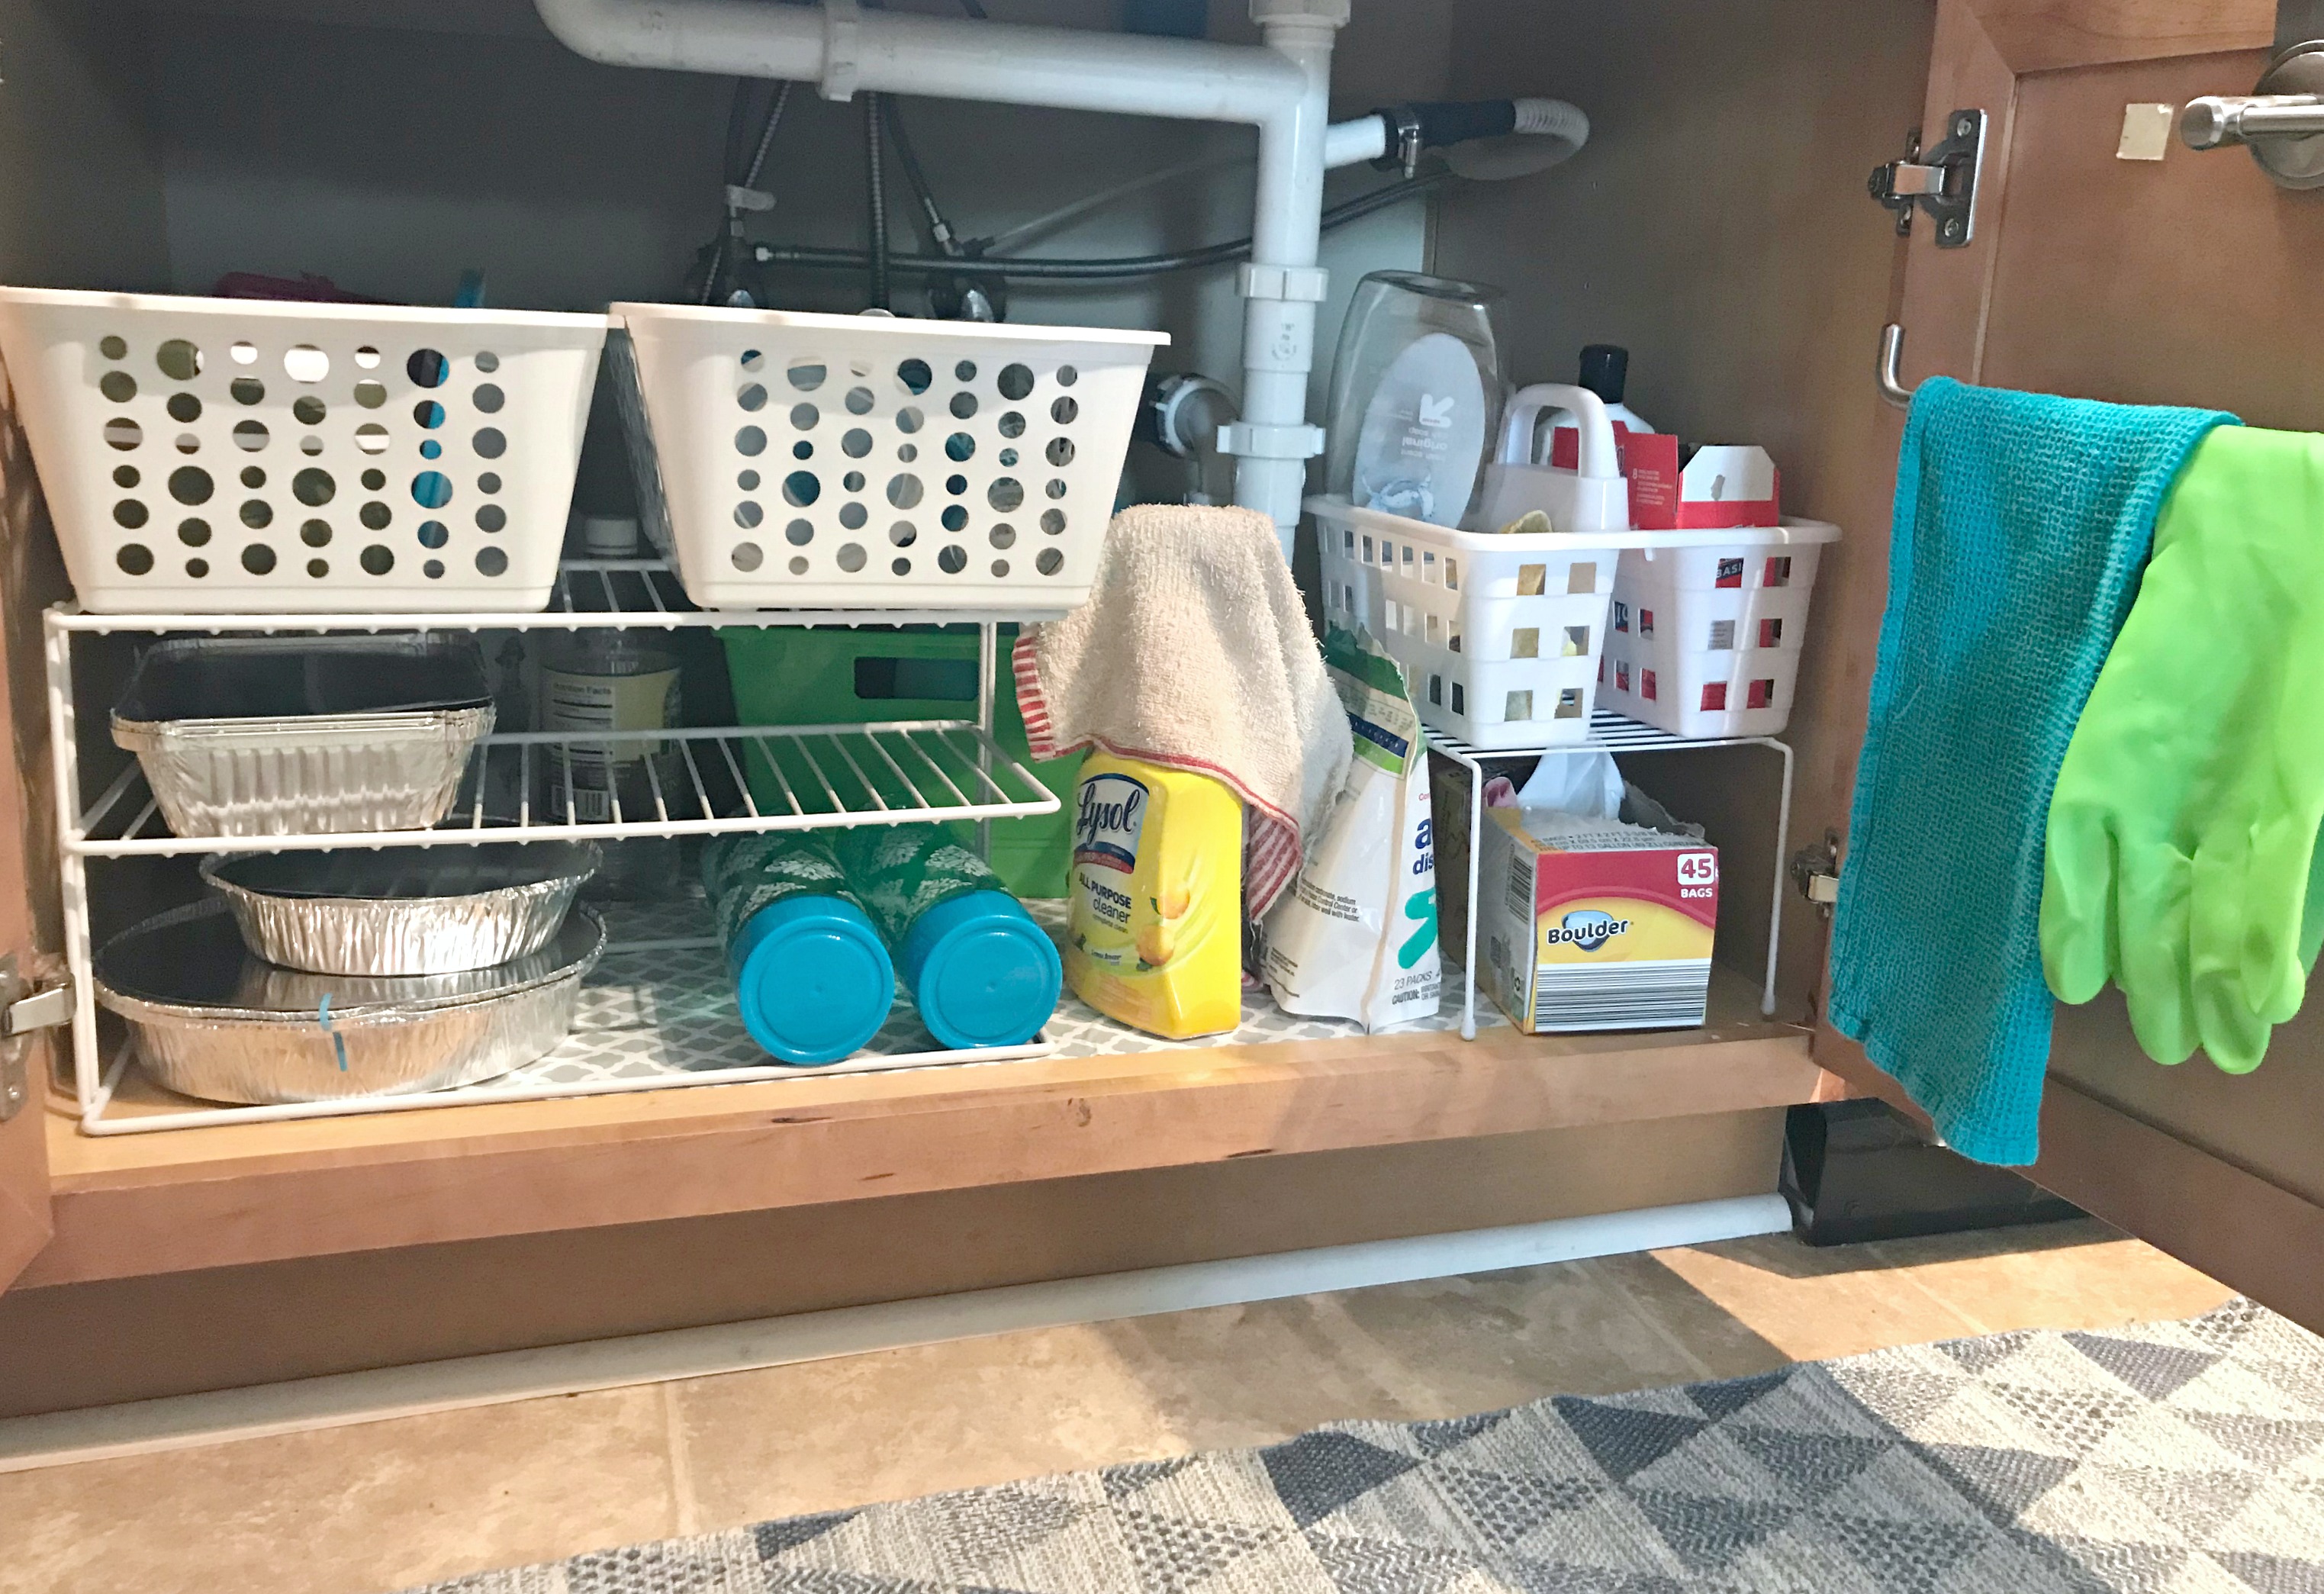 https://comehomeforcomfort.files.wordpress.com/2019/04/organizing-under-the-kitchen-sink-full-view.jpg